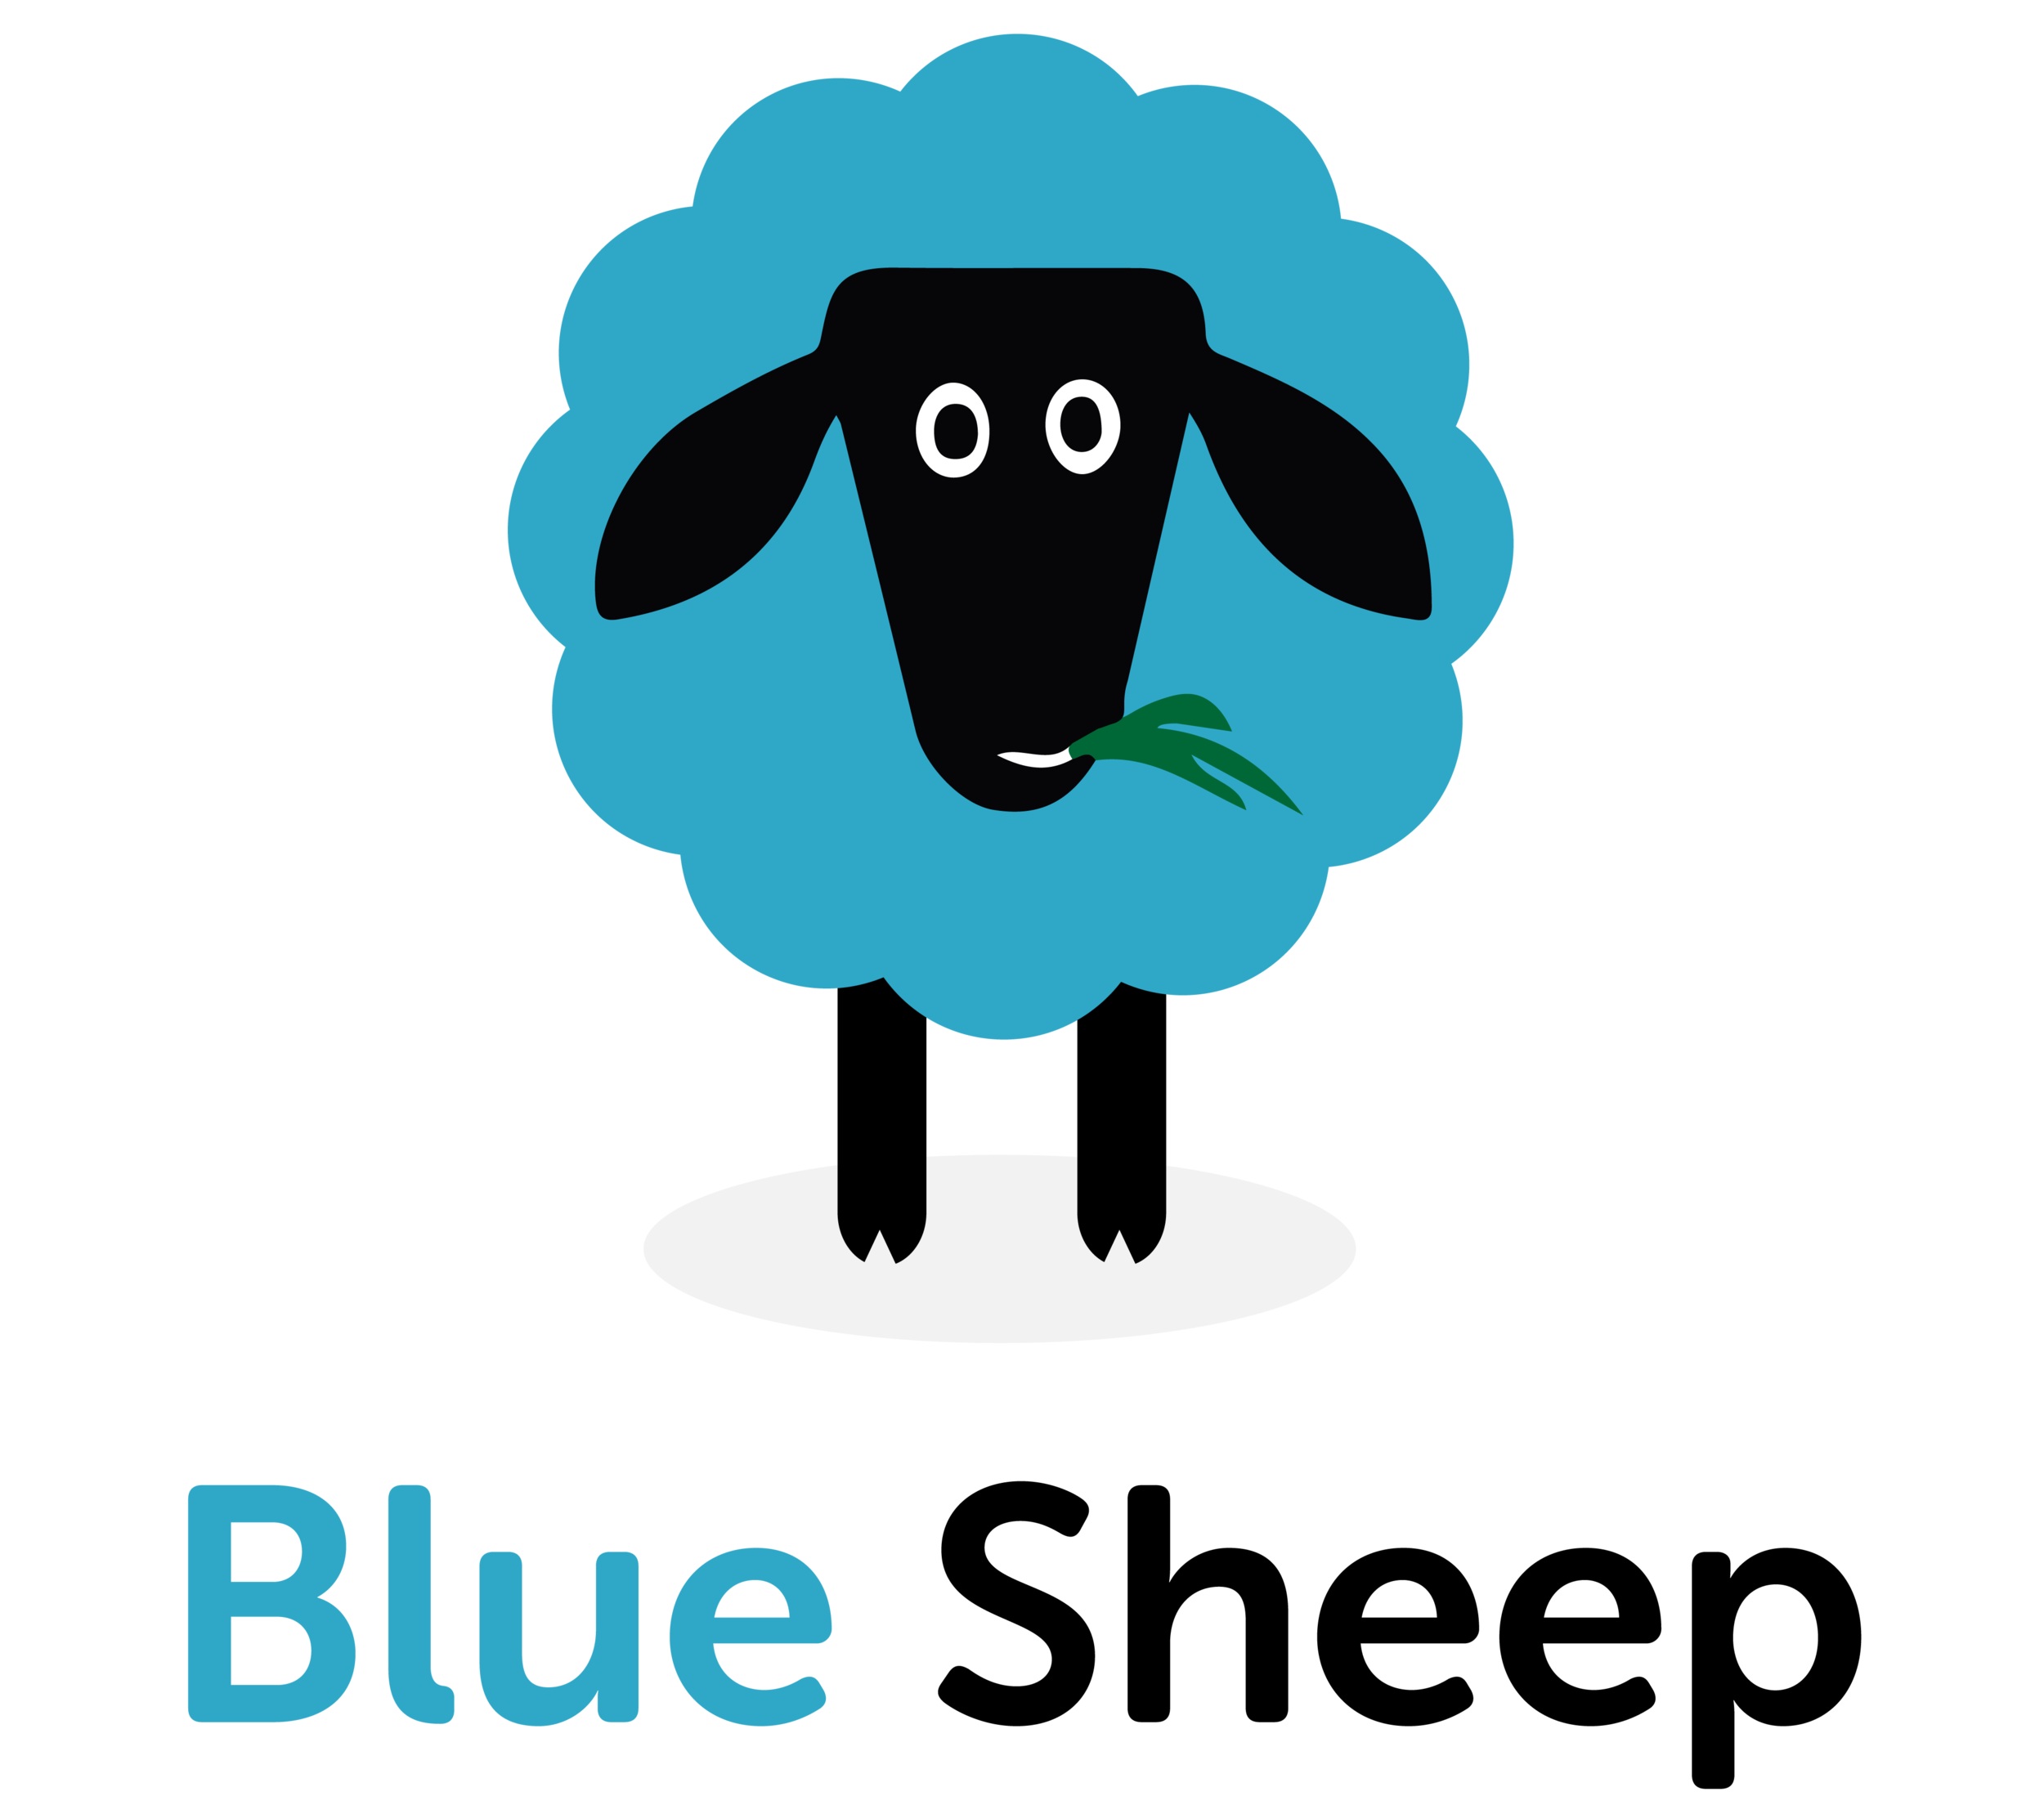 The Blue Sheep